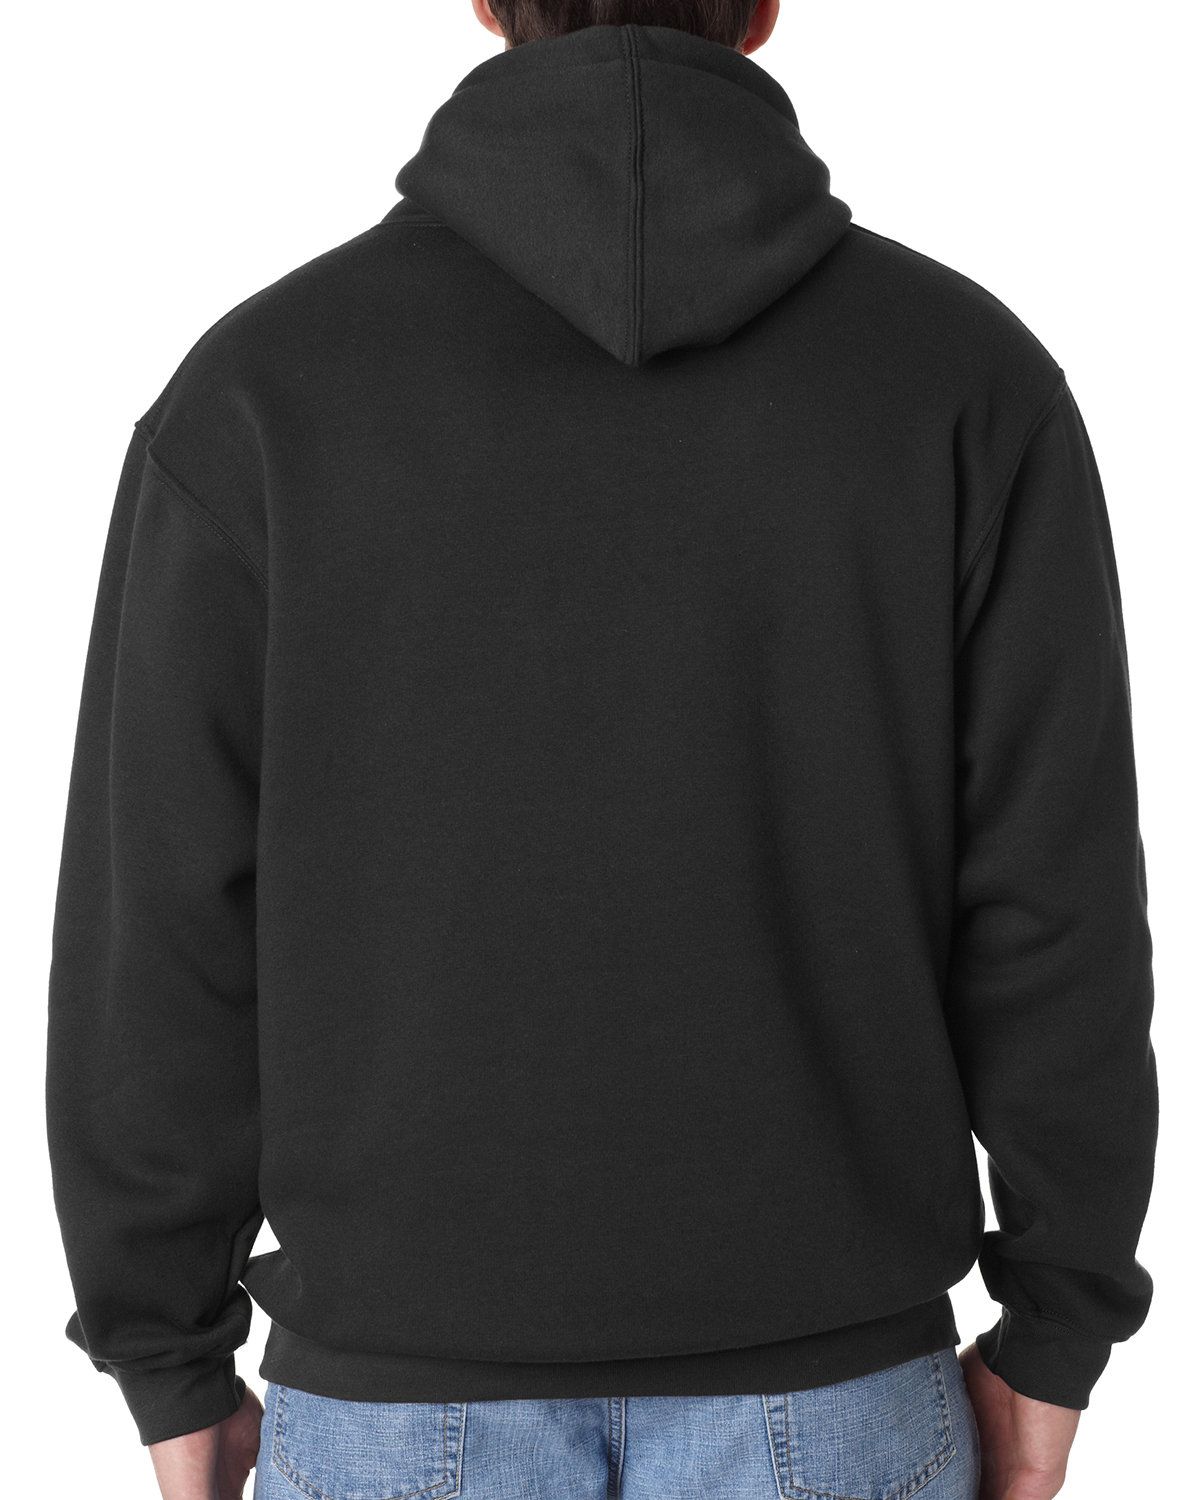 'Bayside BA960 Adult 80/20 Pullover Hooded Sweatshirt'